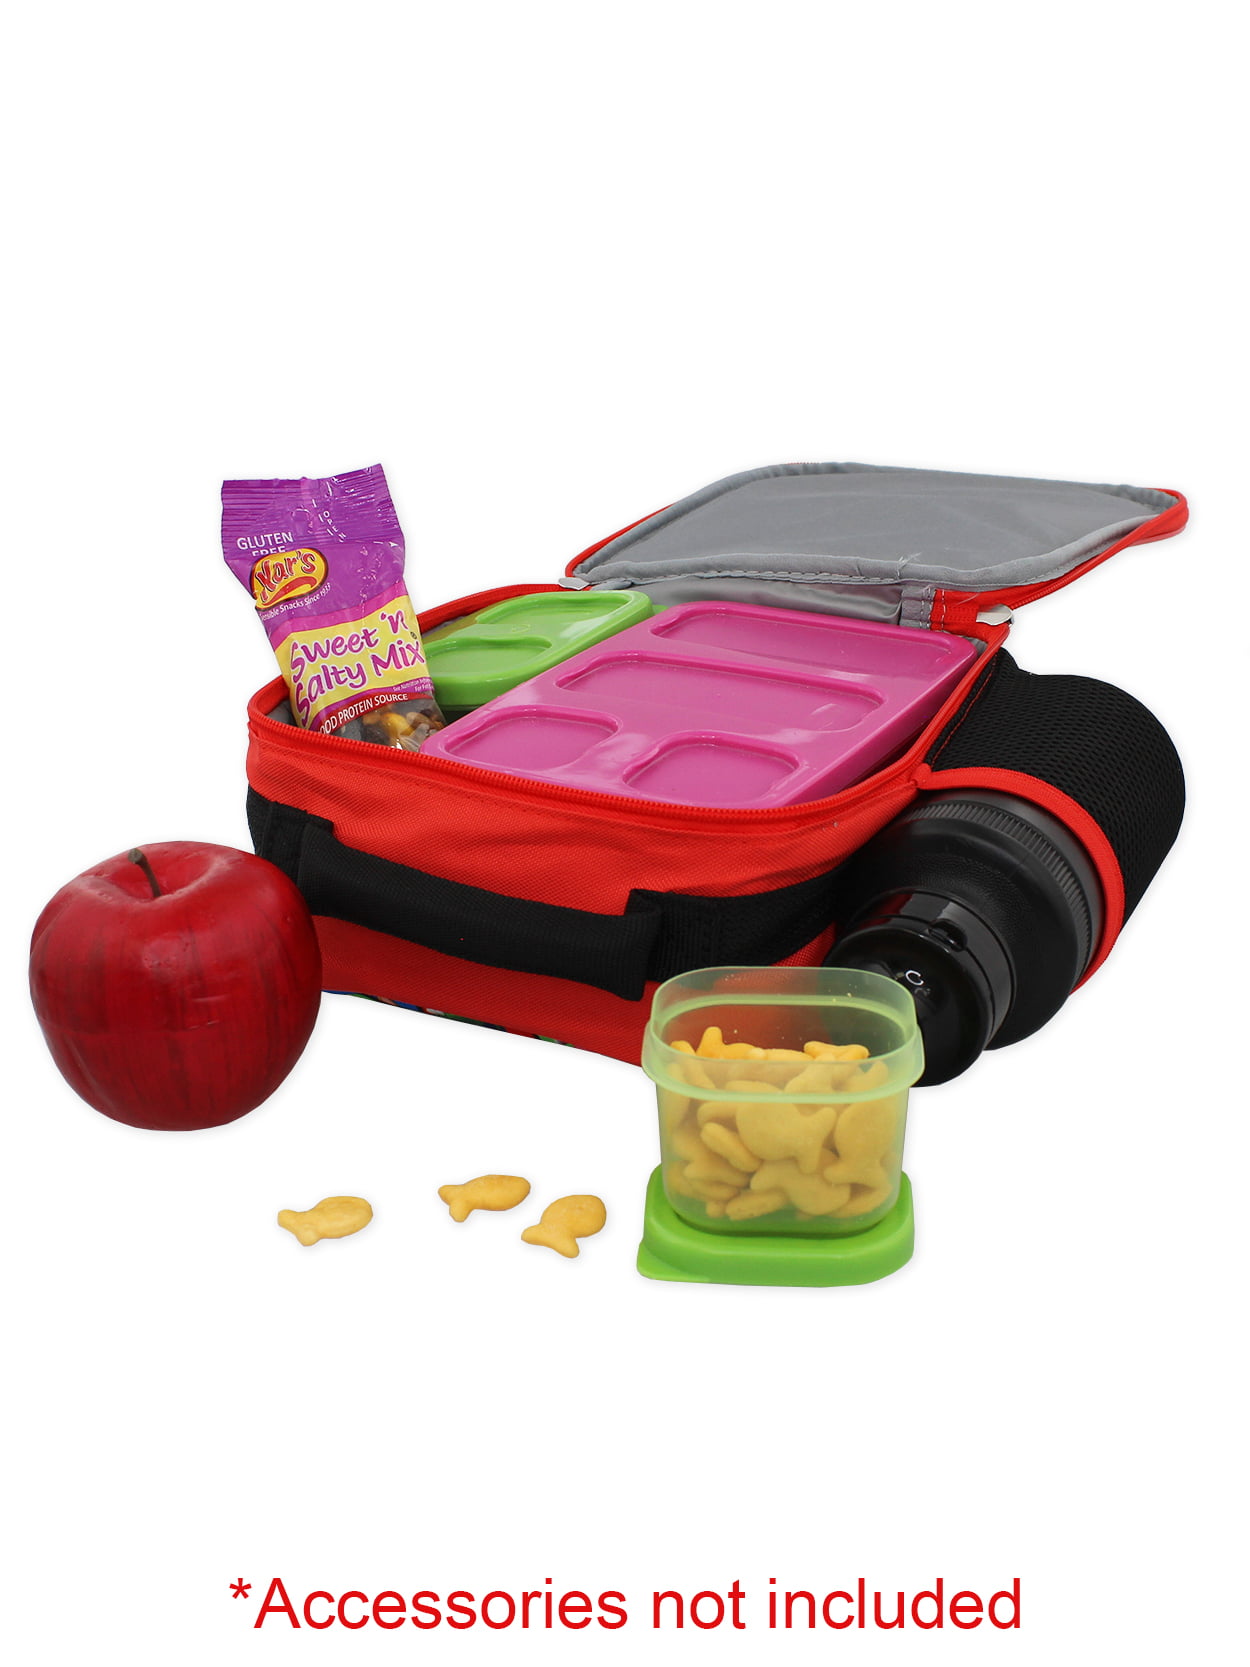 Super Mario Bros. Mario Kart Roll-Top Insulated Lunch Bag